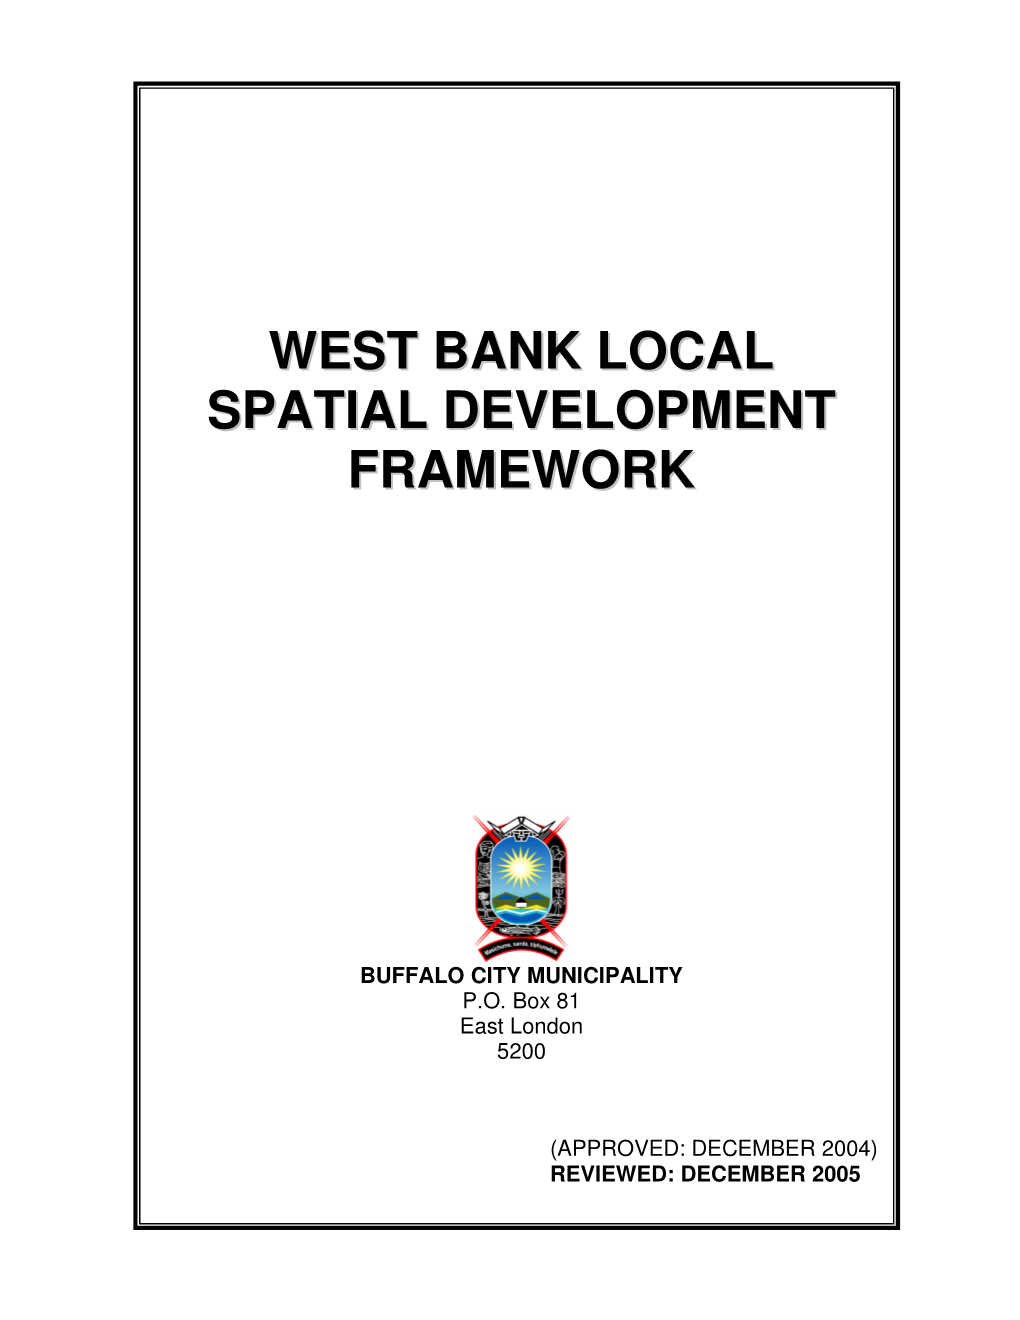 West Bank Local Spatial Development Framework (WBLSDF) Is Deemed to Be of Strategic Importance